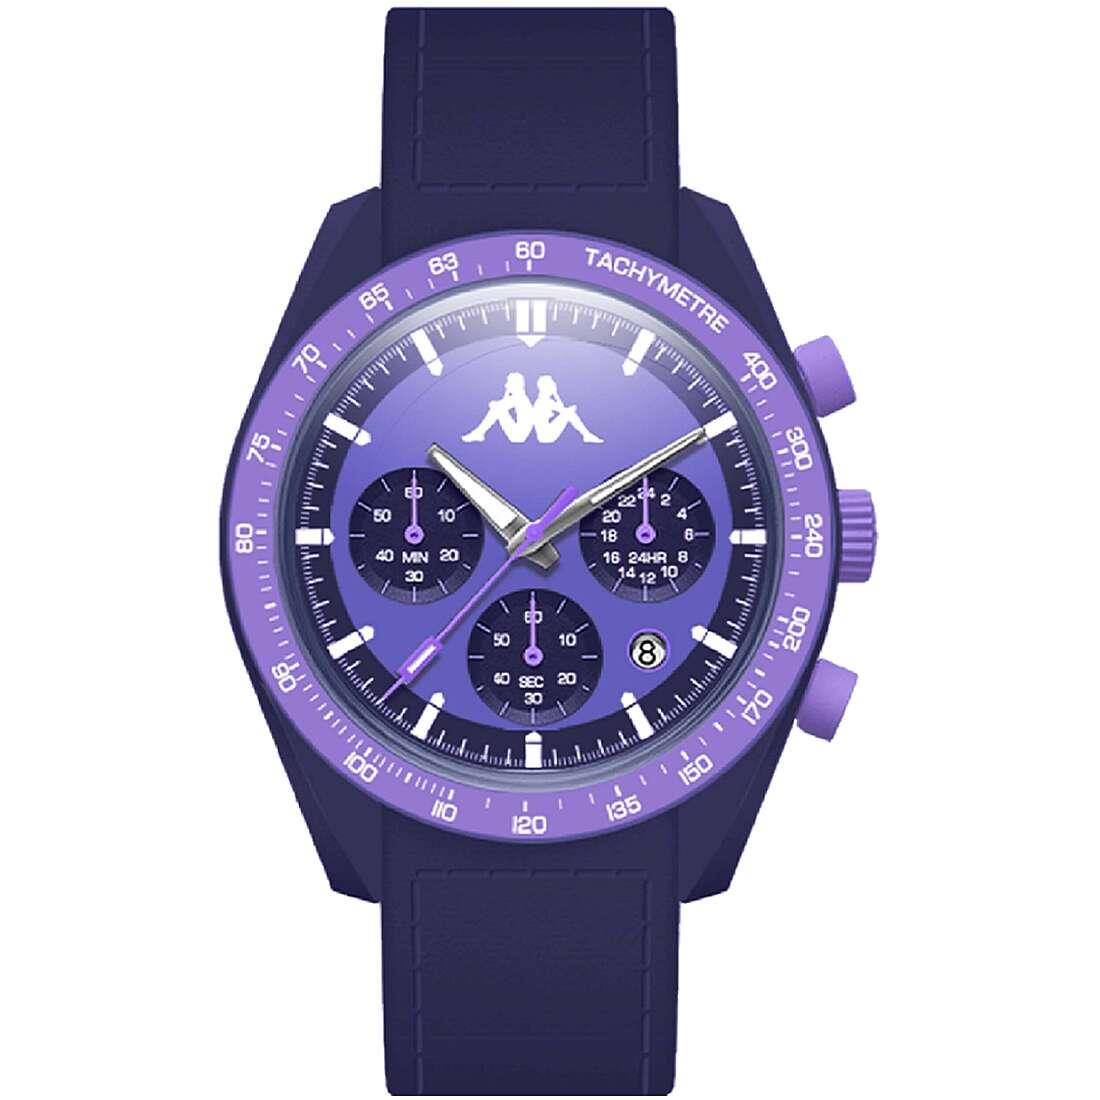 45mm lilac case watch - KAPPA